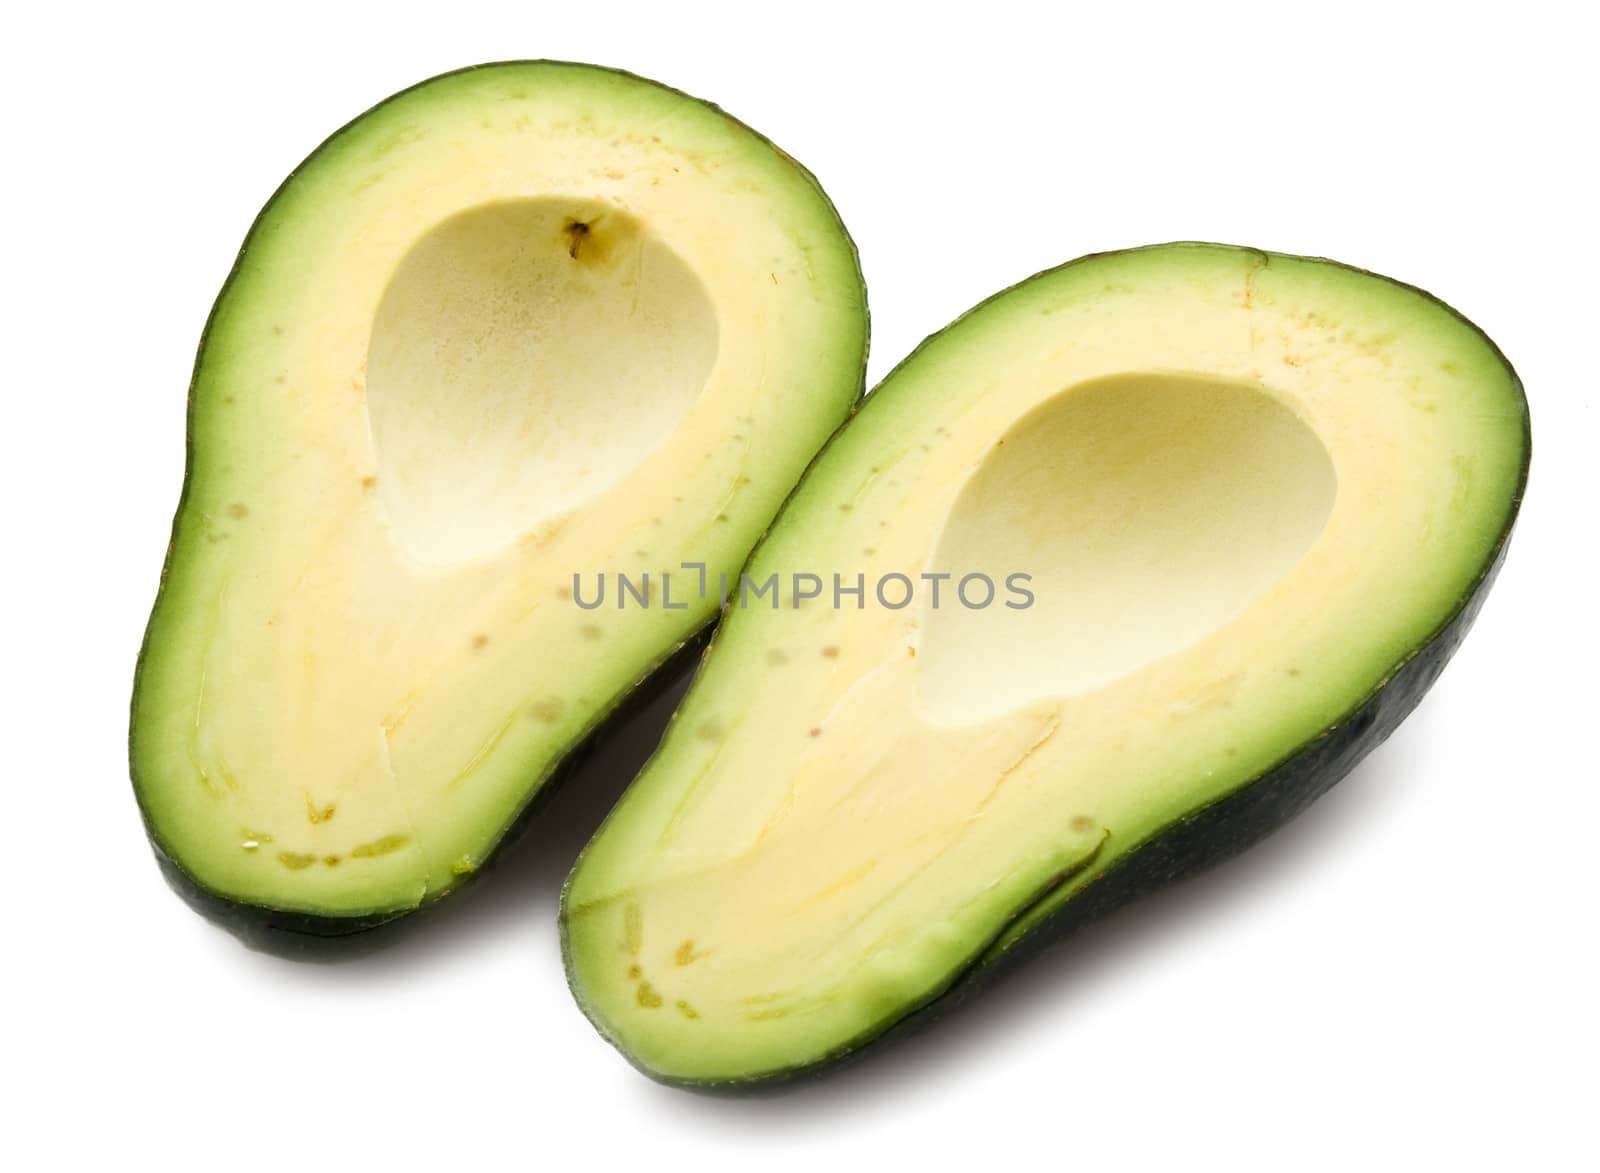 Fresh green avocado isolated on white background